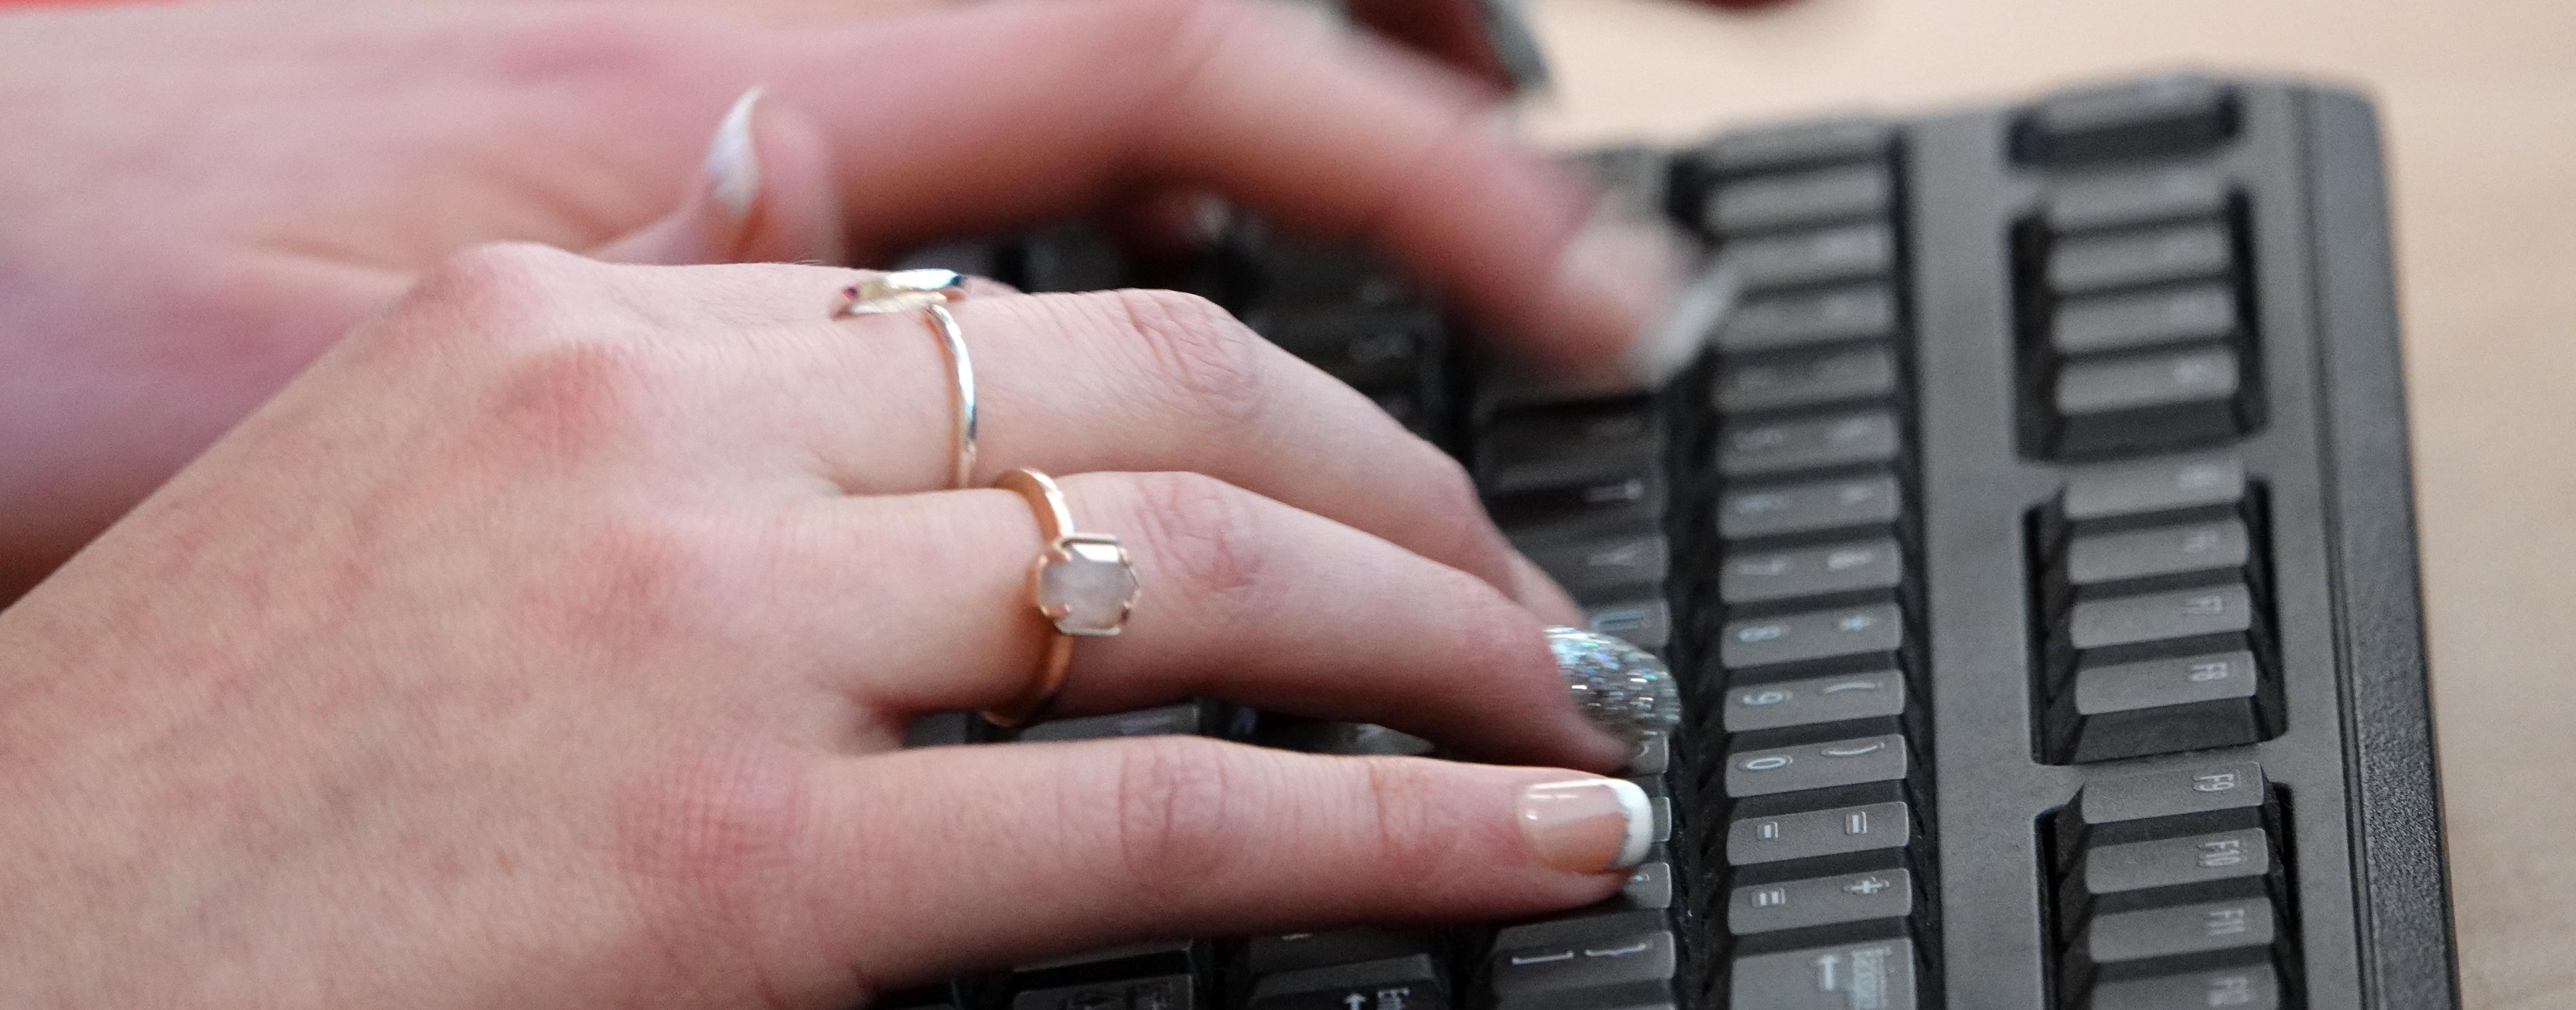  Woman's hands on keyboard